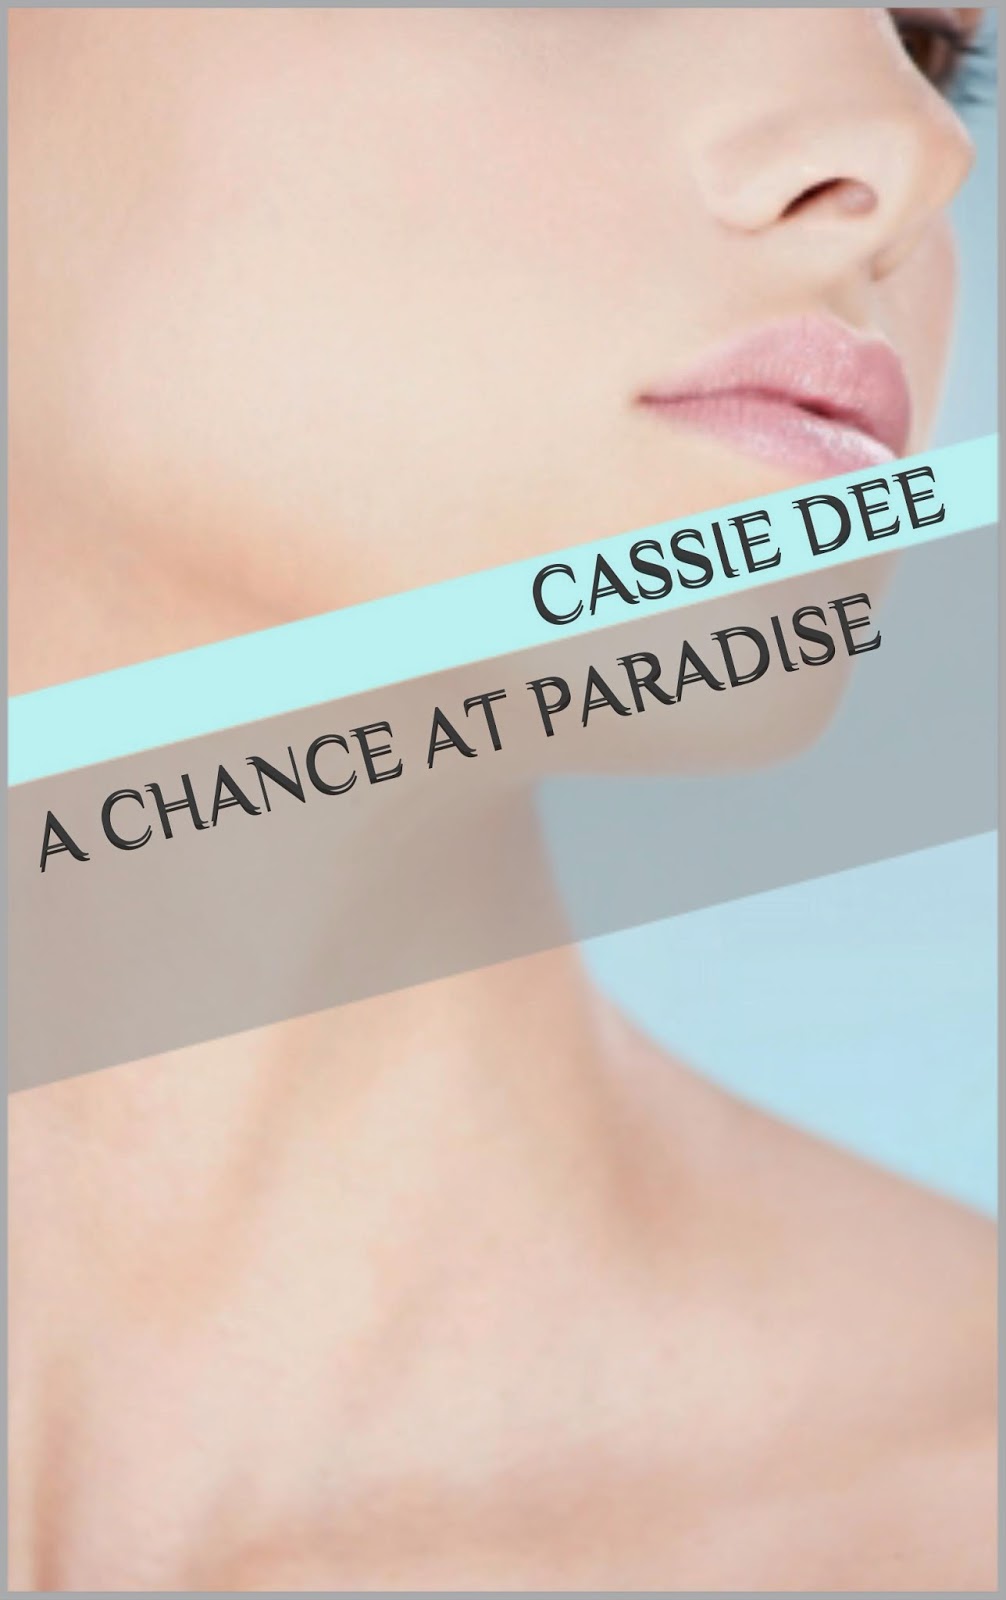 http://www.amazon.com/Chance-at-Paradise-Cassie-Dee-ebook/dp/B00KOVLQGC